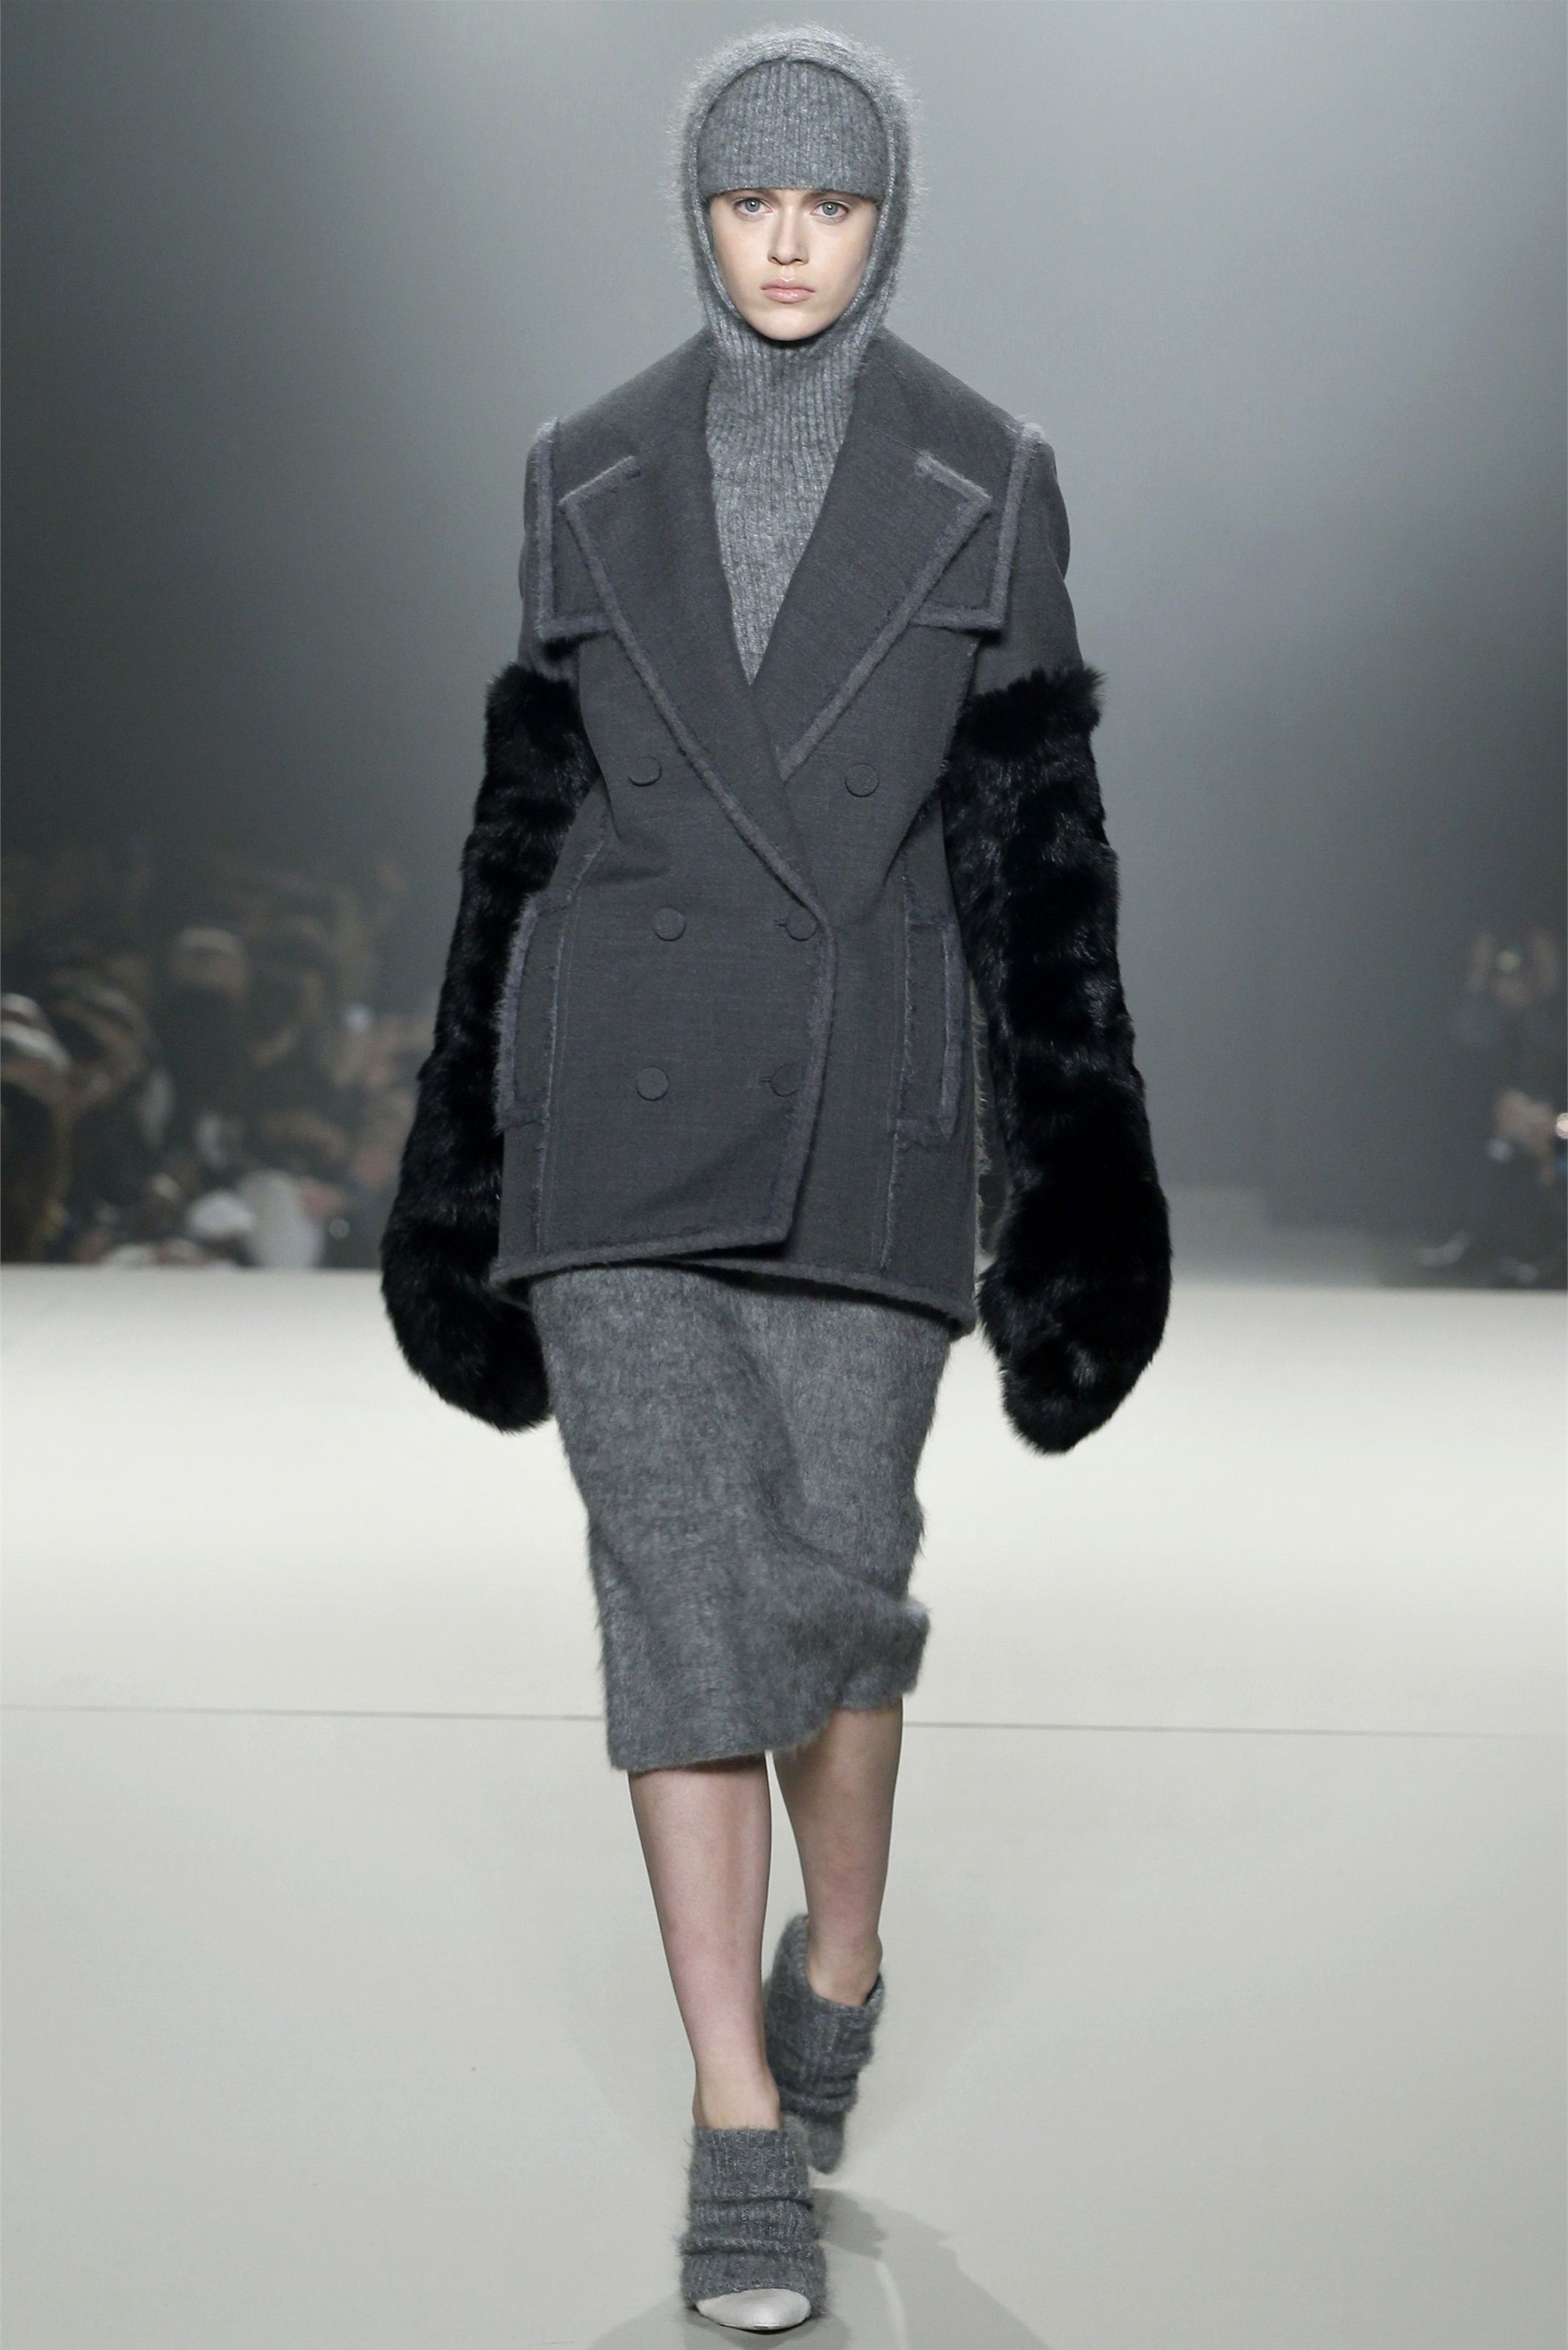 Alexander Wang Fall/Winter 2013 – New York fashion week | Fab Fashion Fix